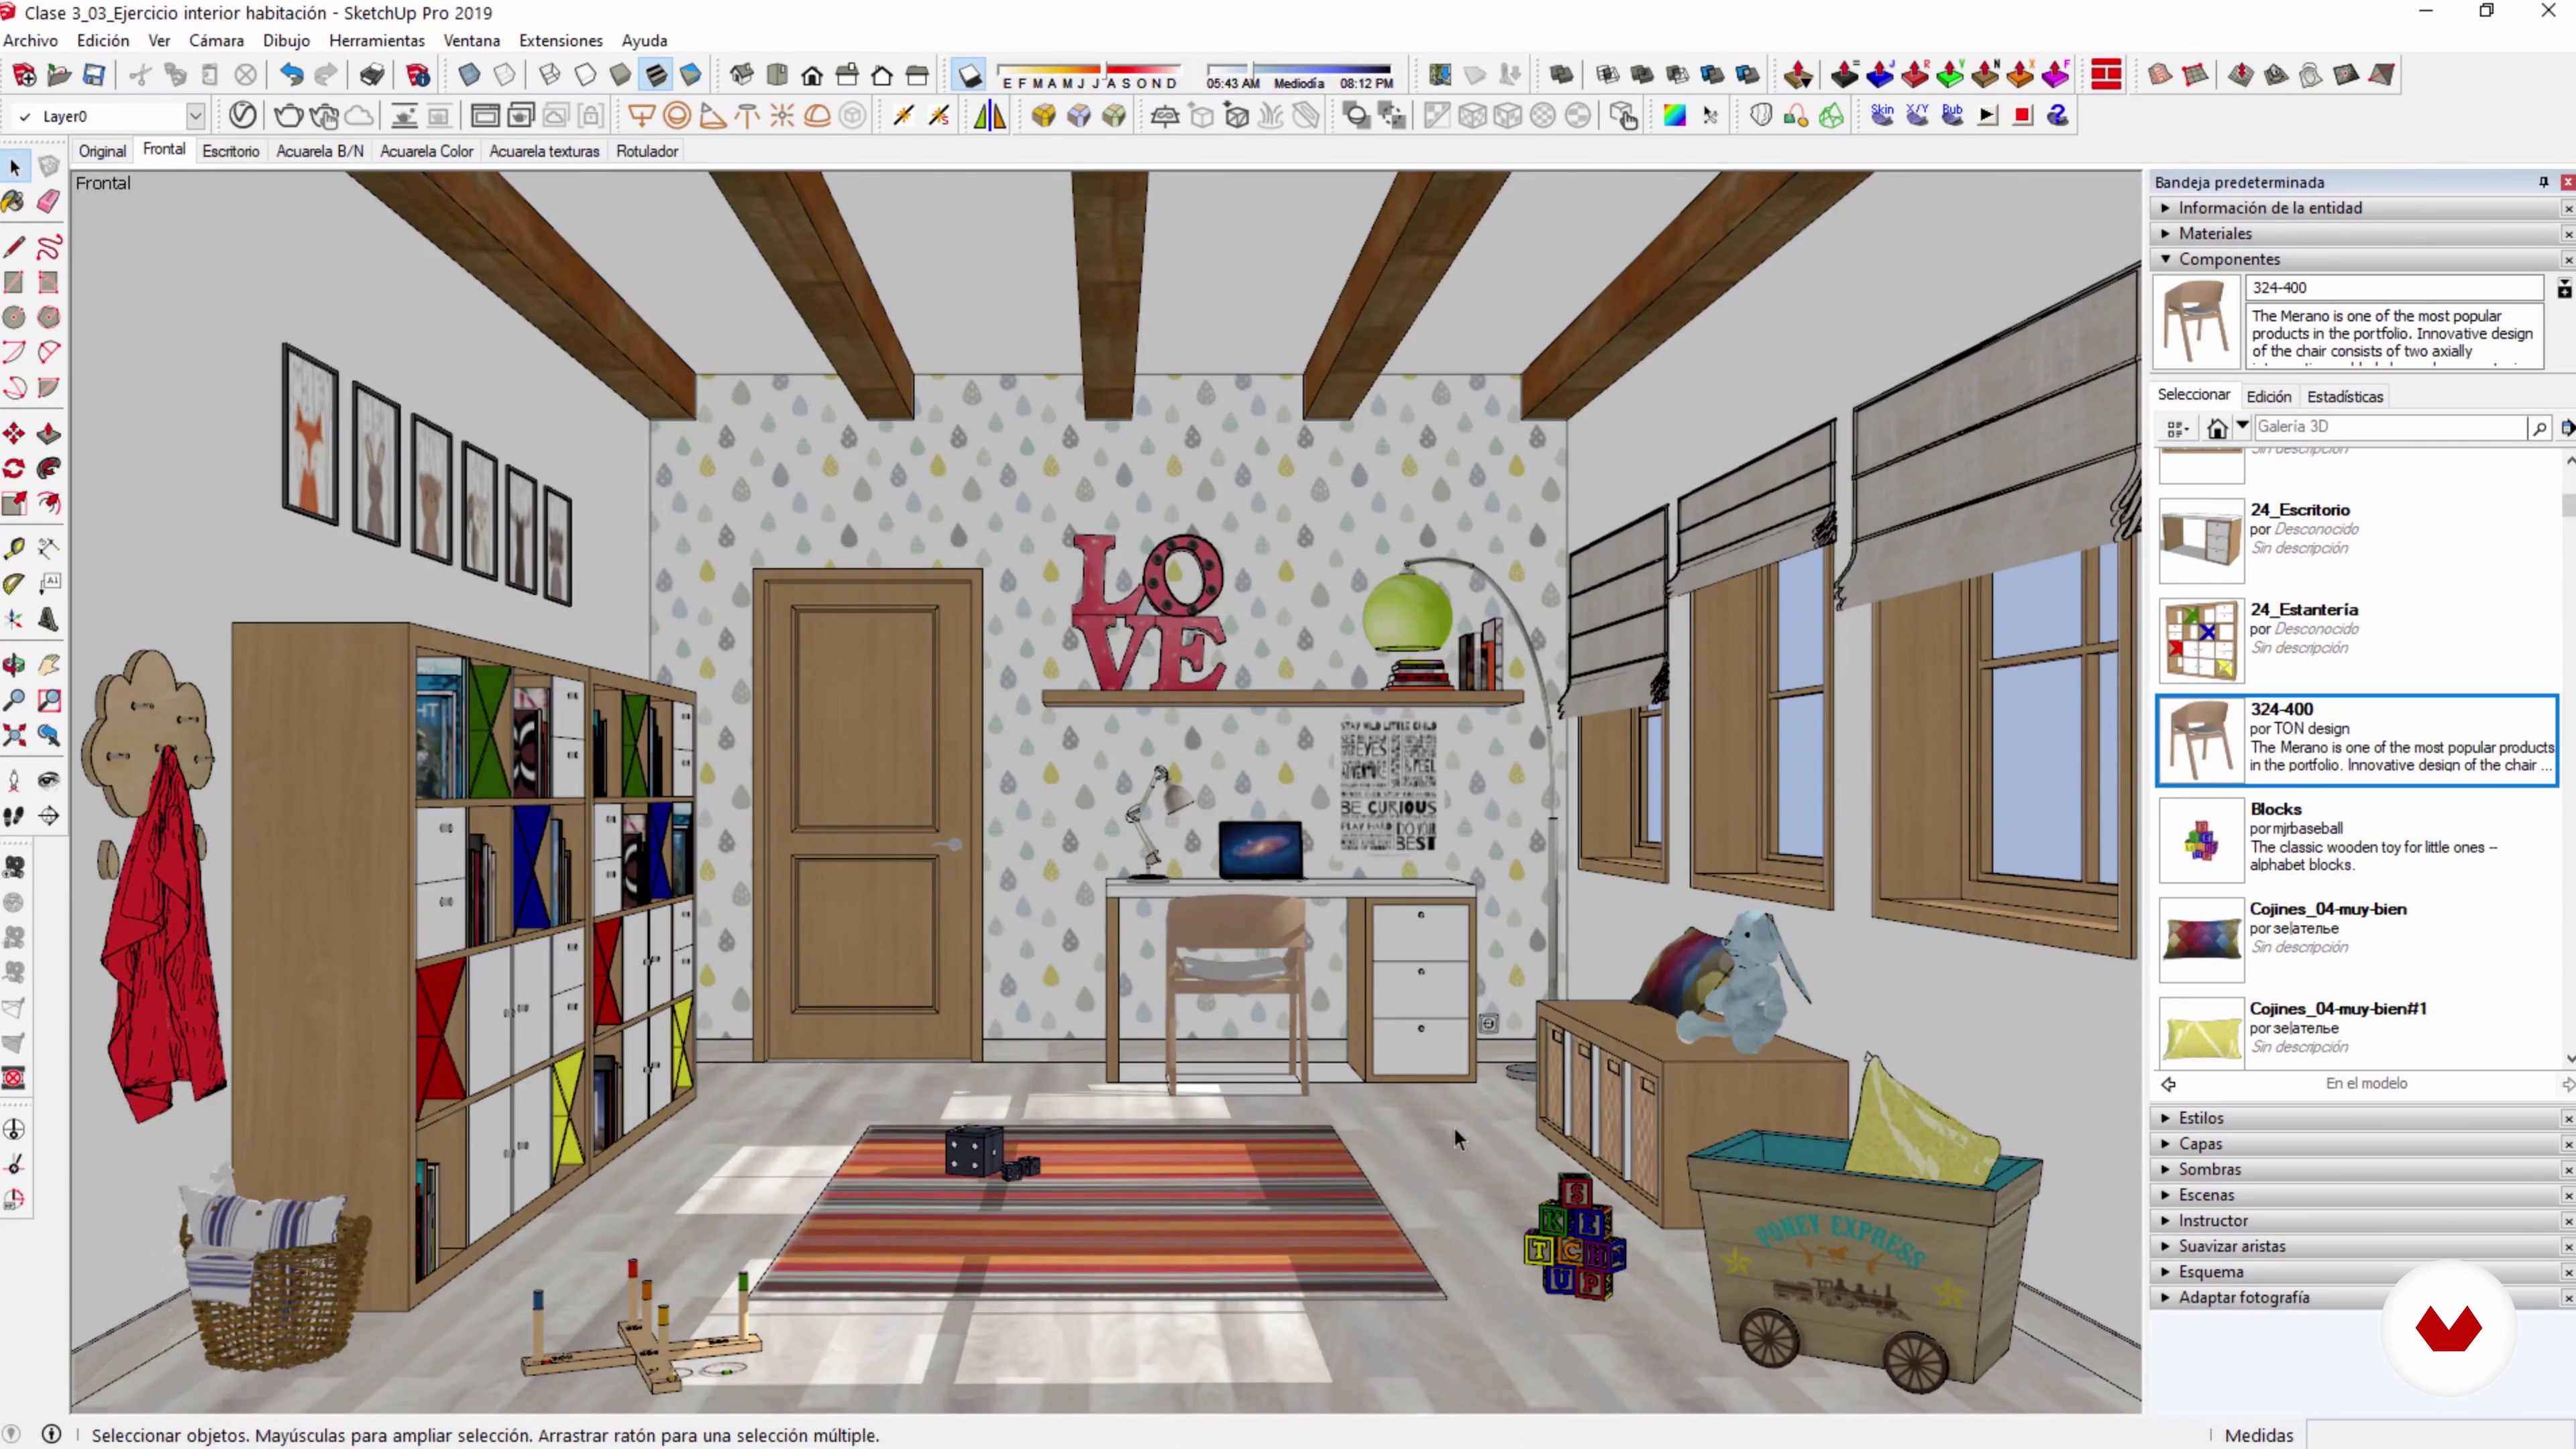 Free interior decorating software - gooddenis